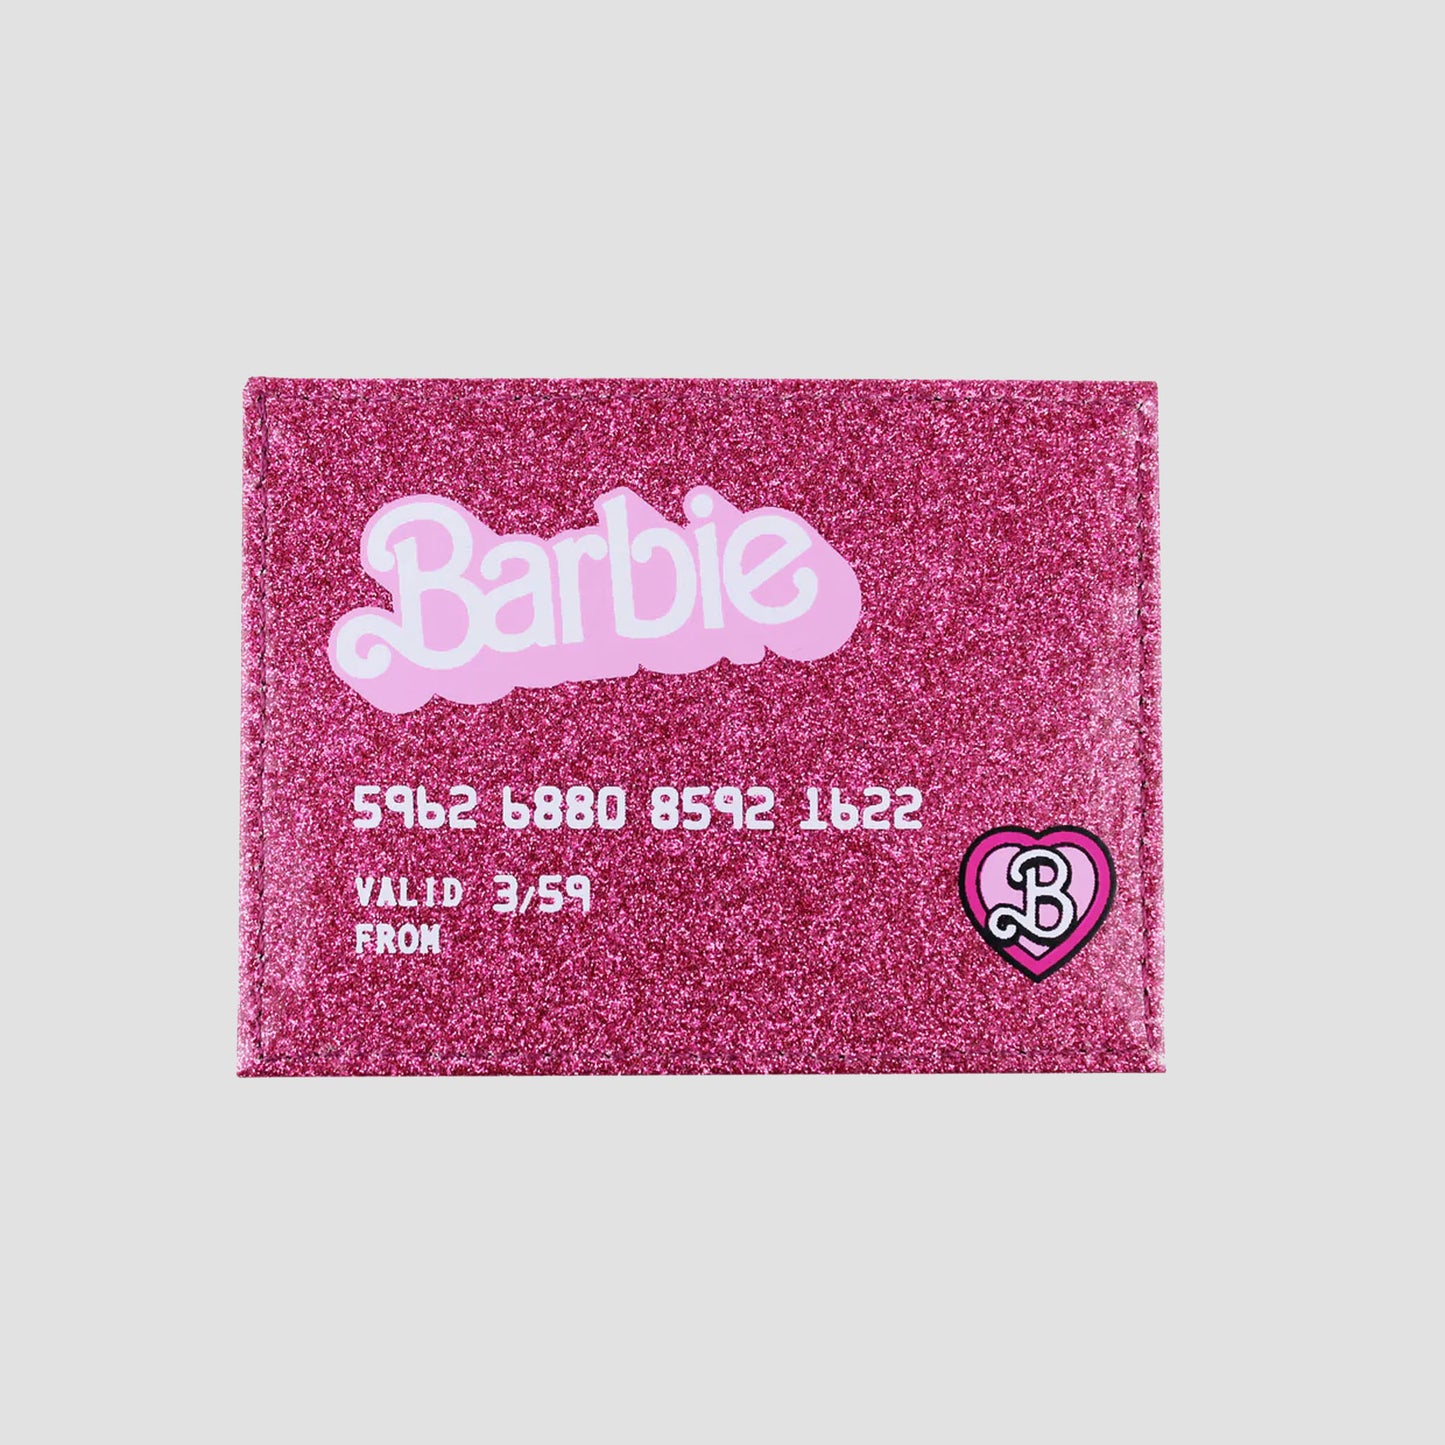 Barbie Credit Card Holder Wallet by Cakeworthy